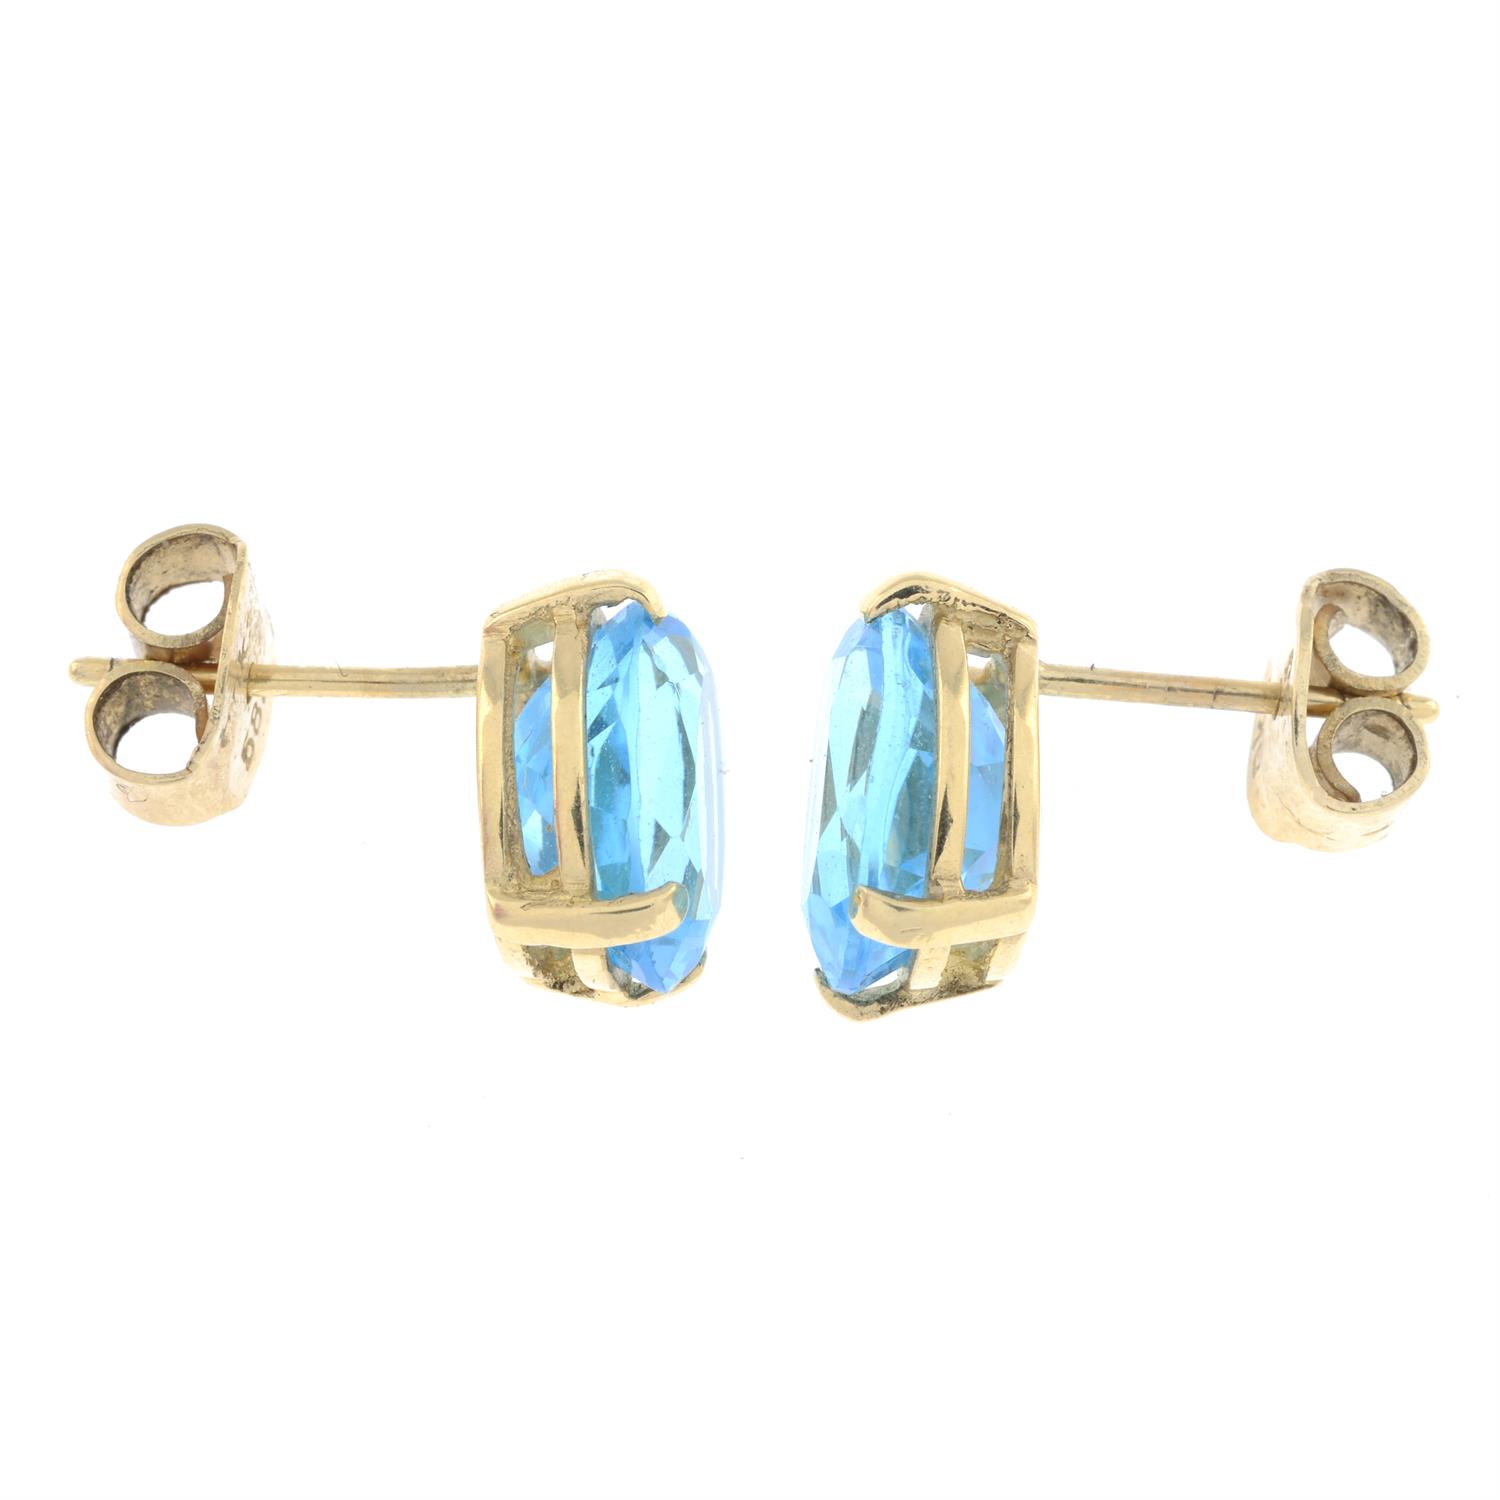 Blue topaz stud earrings - Image 2 of 2